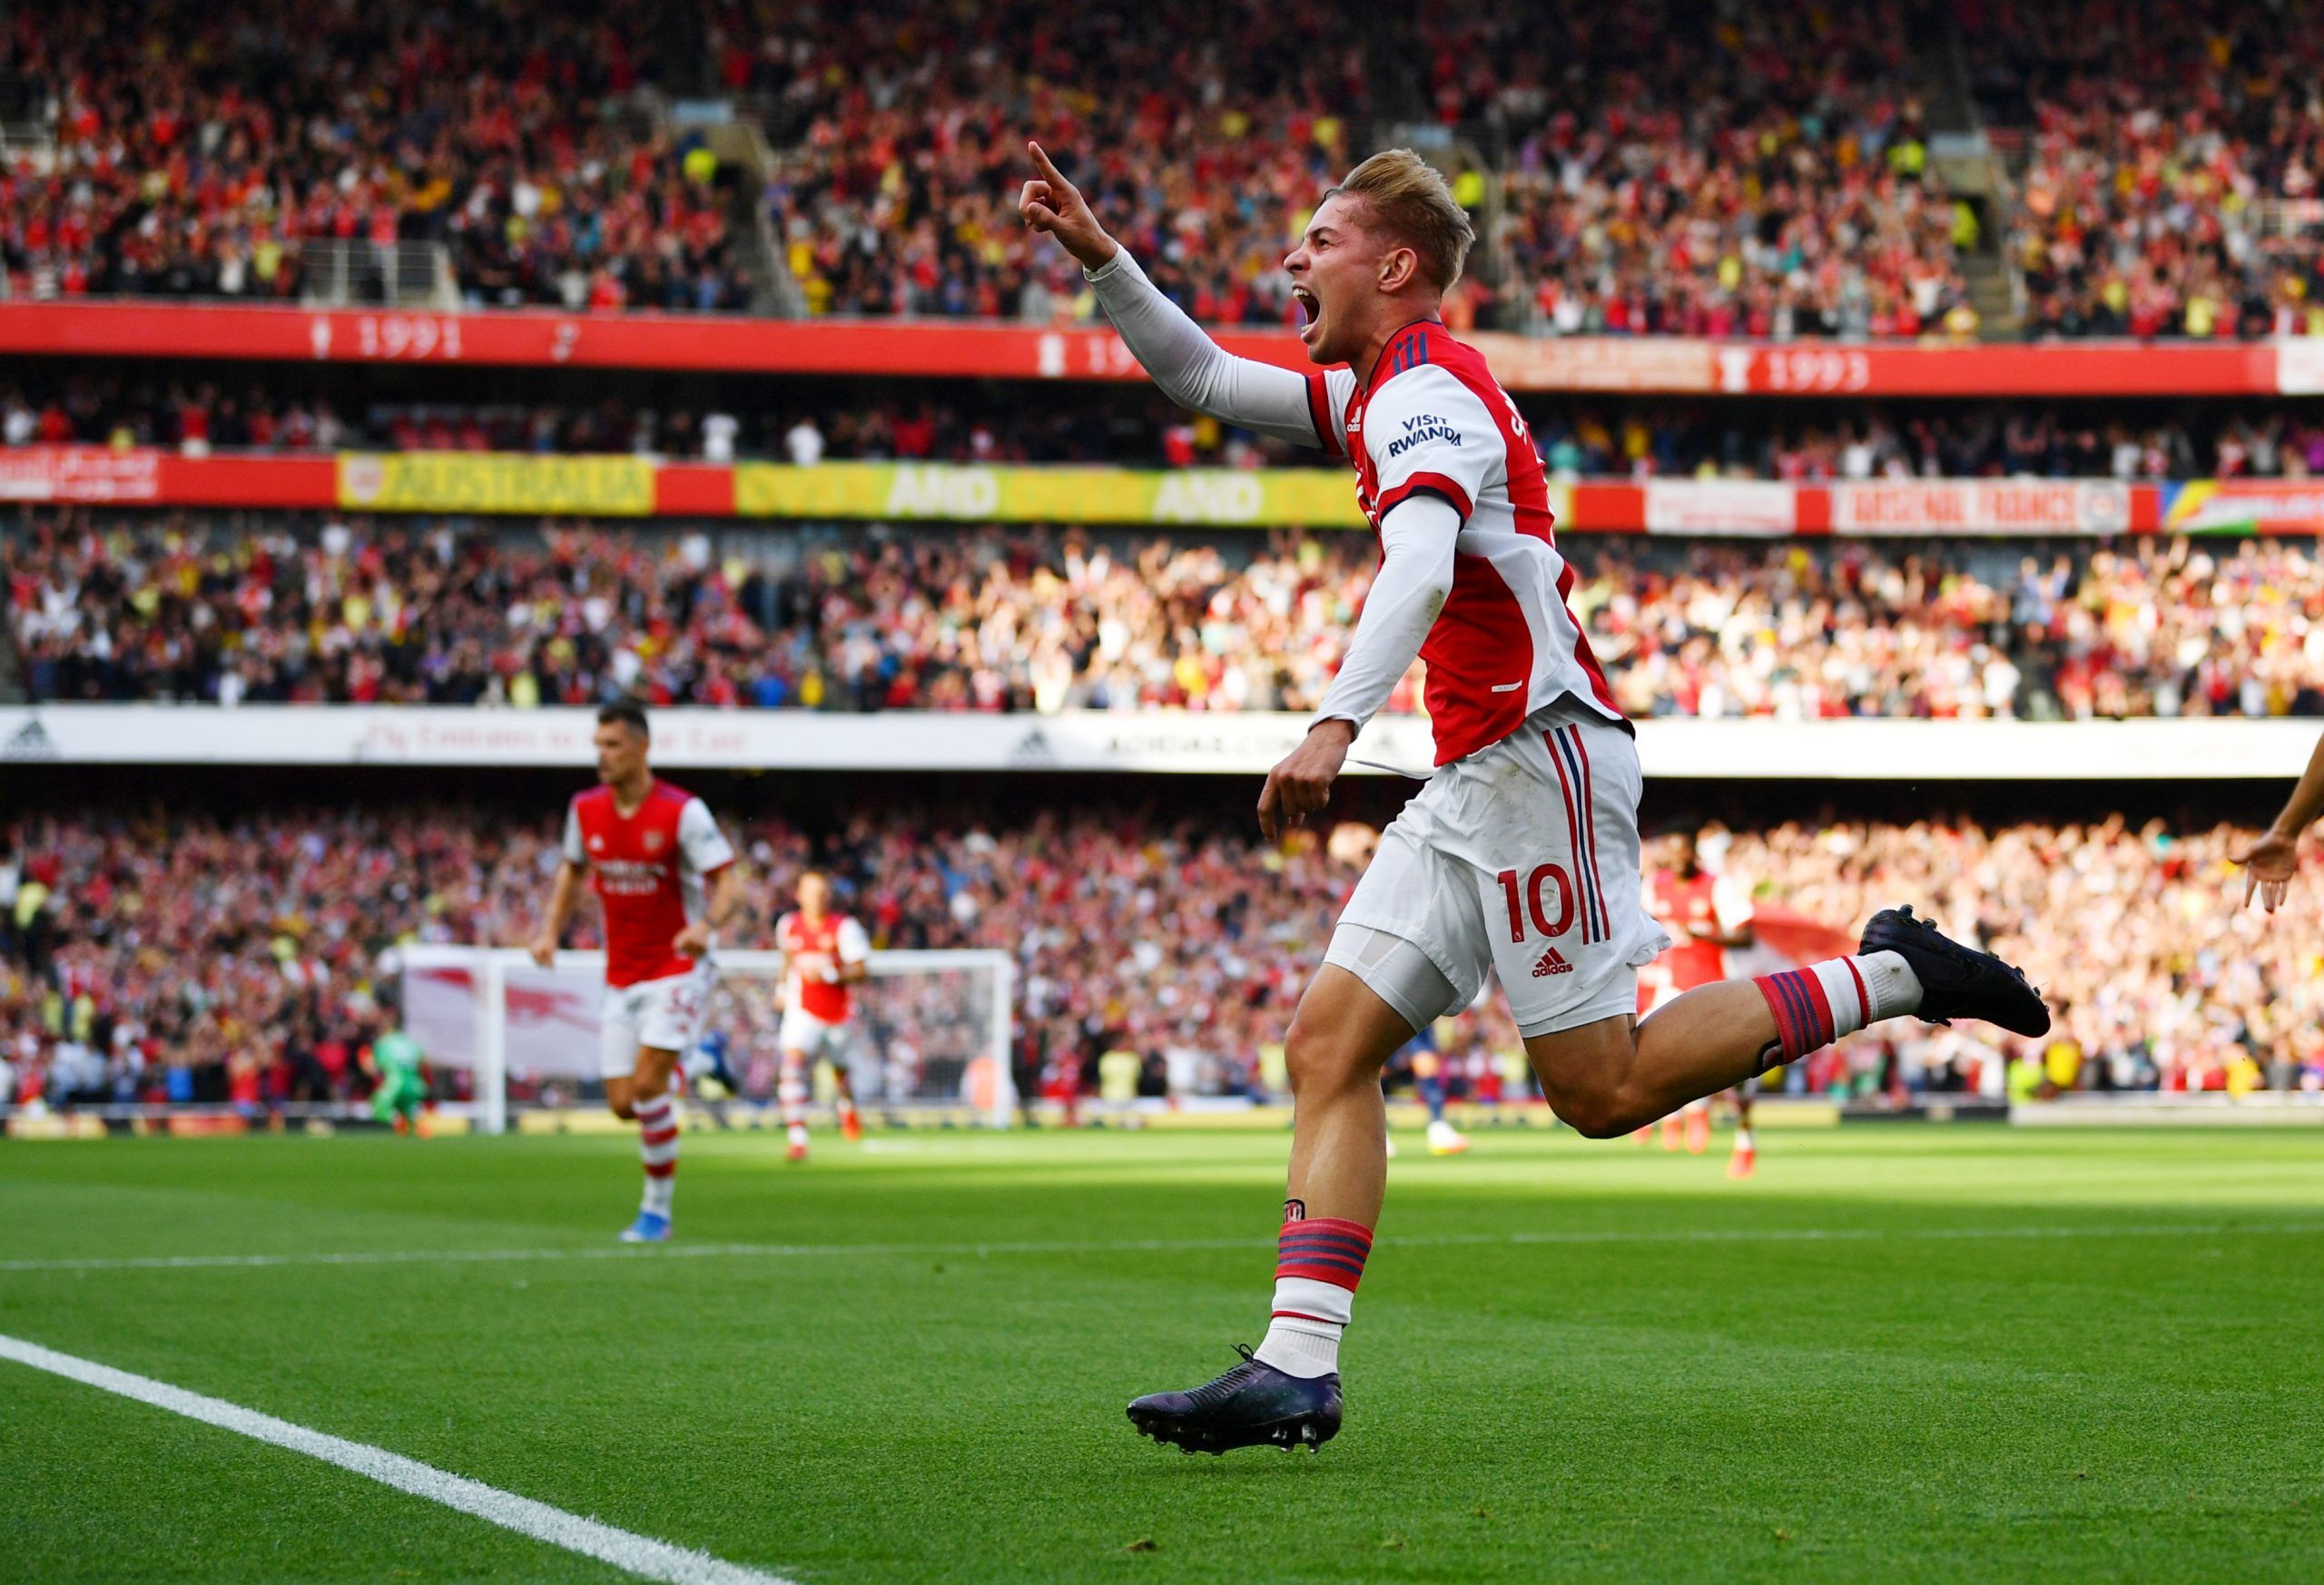 Arsenal's Emile Smith Rowe celebrates scoring their first goal vs Tottenham Hotspur at the Emirates Stadium